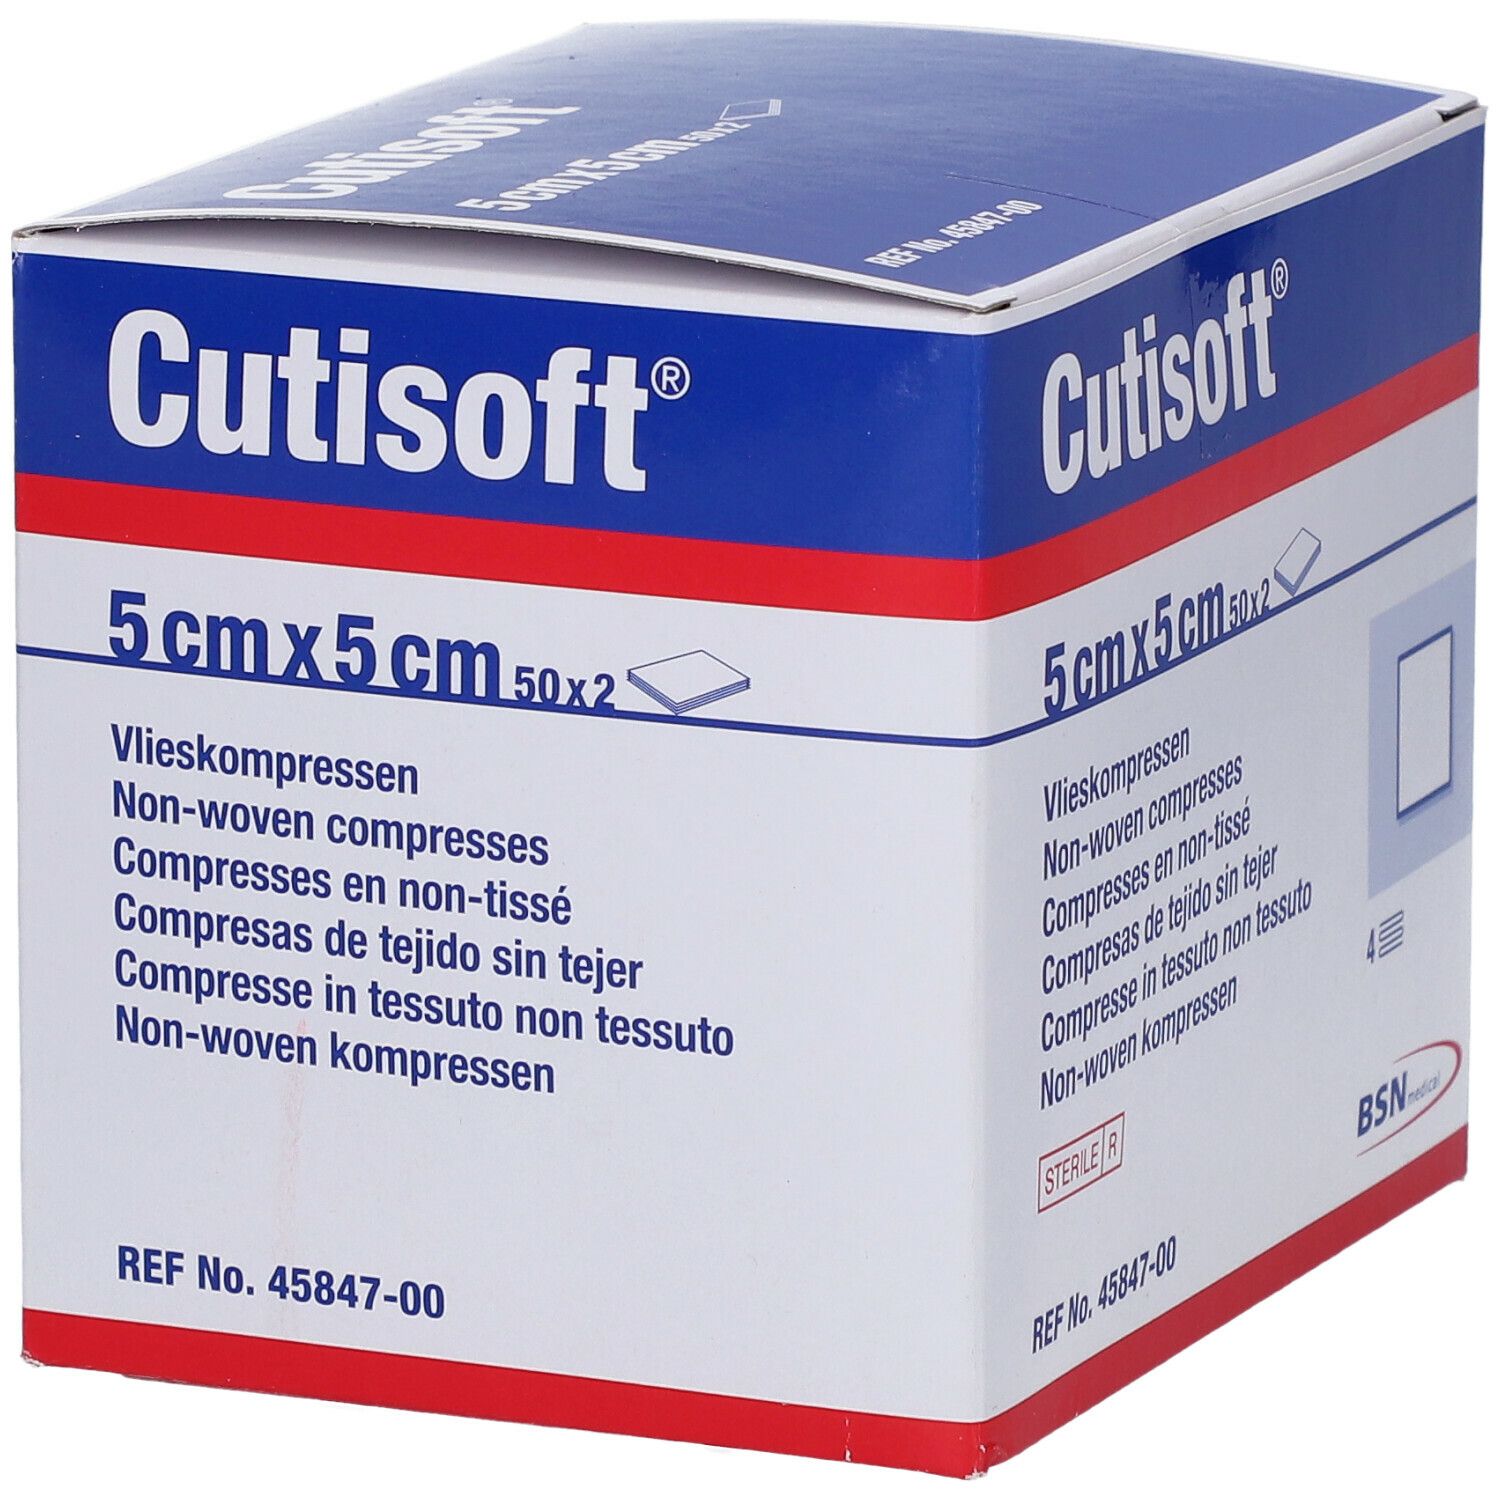 Cutisoft® Vlieskompresse steril 5 cm x 5 cm